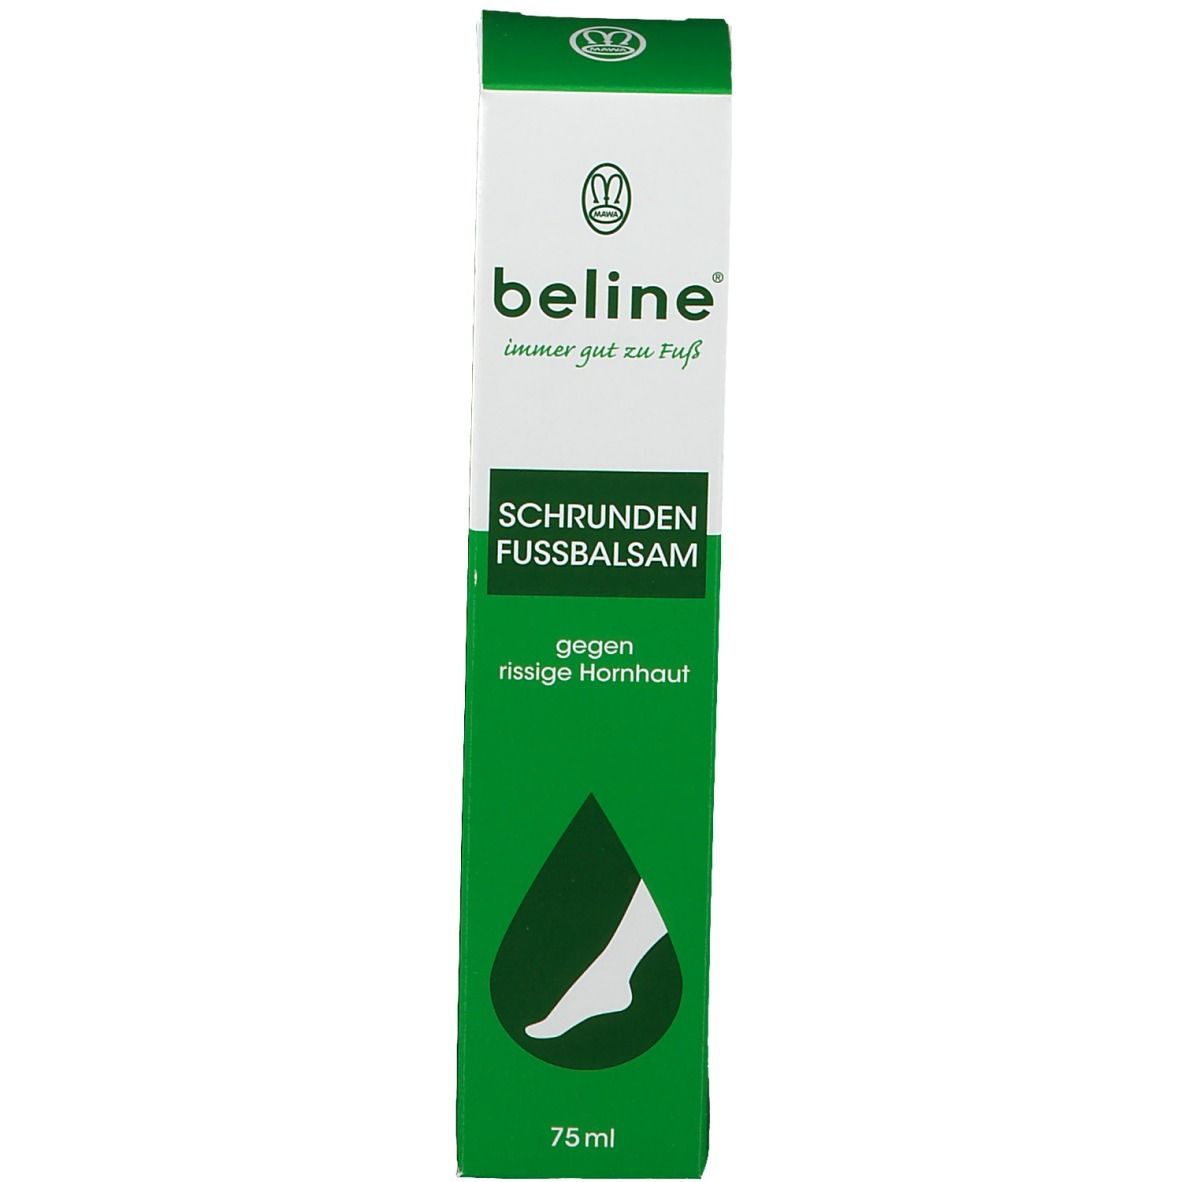 beline® Schrunden Fussbalsam